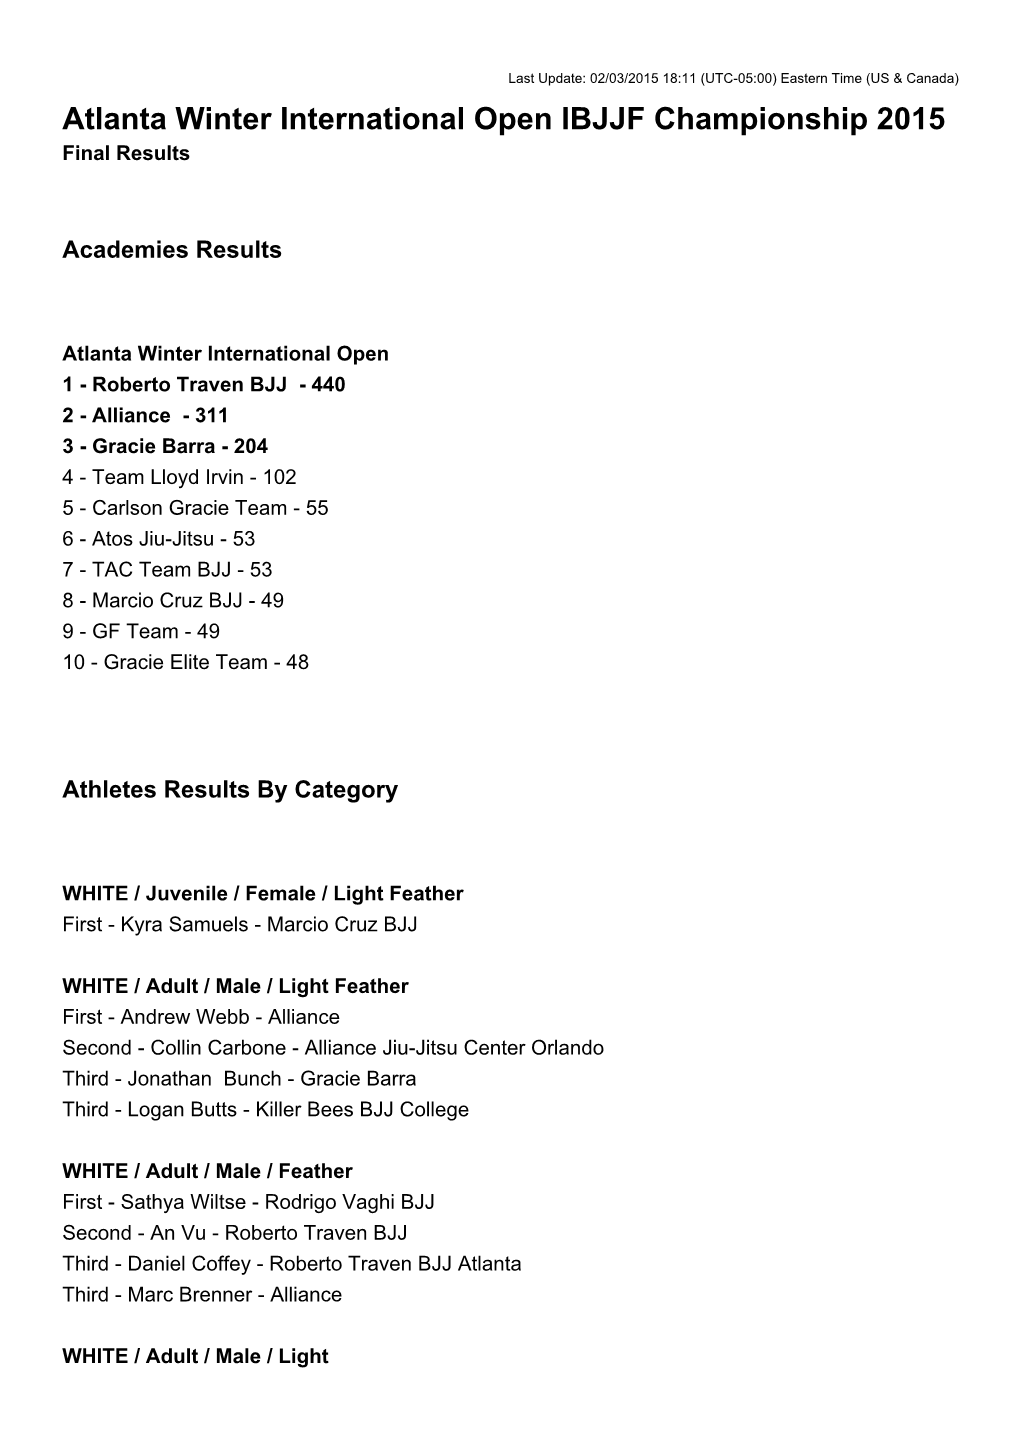 Atlanta Winter International Open IBJJF Championship 2015 Final Results